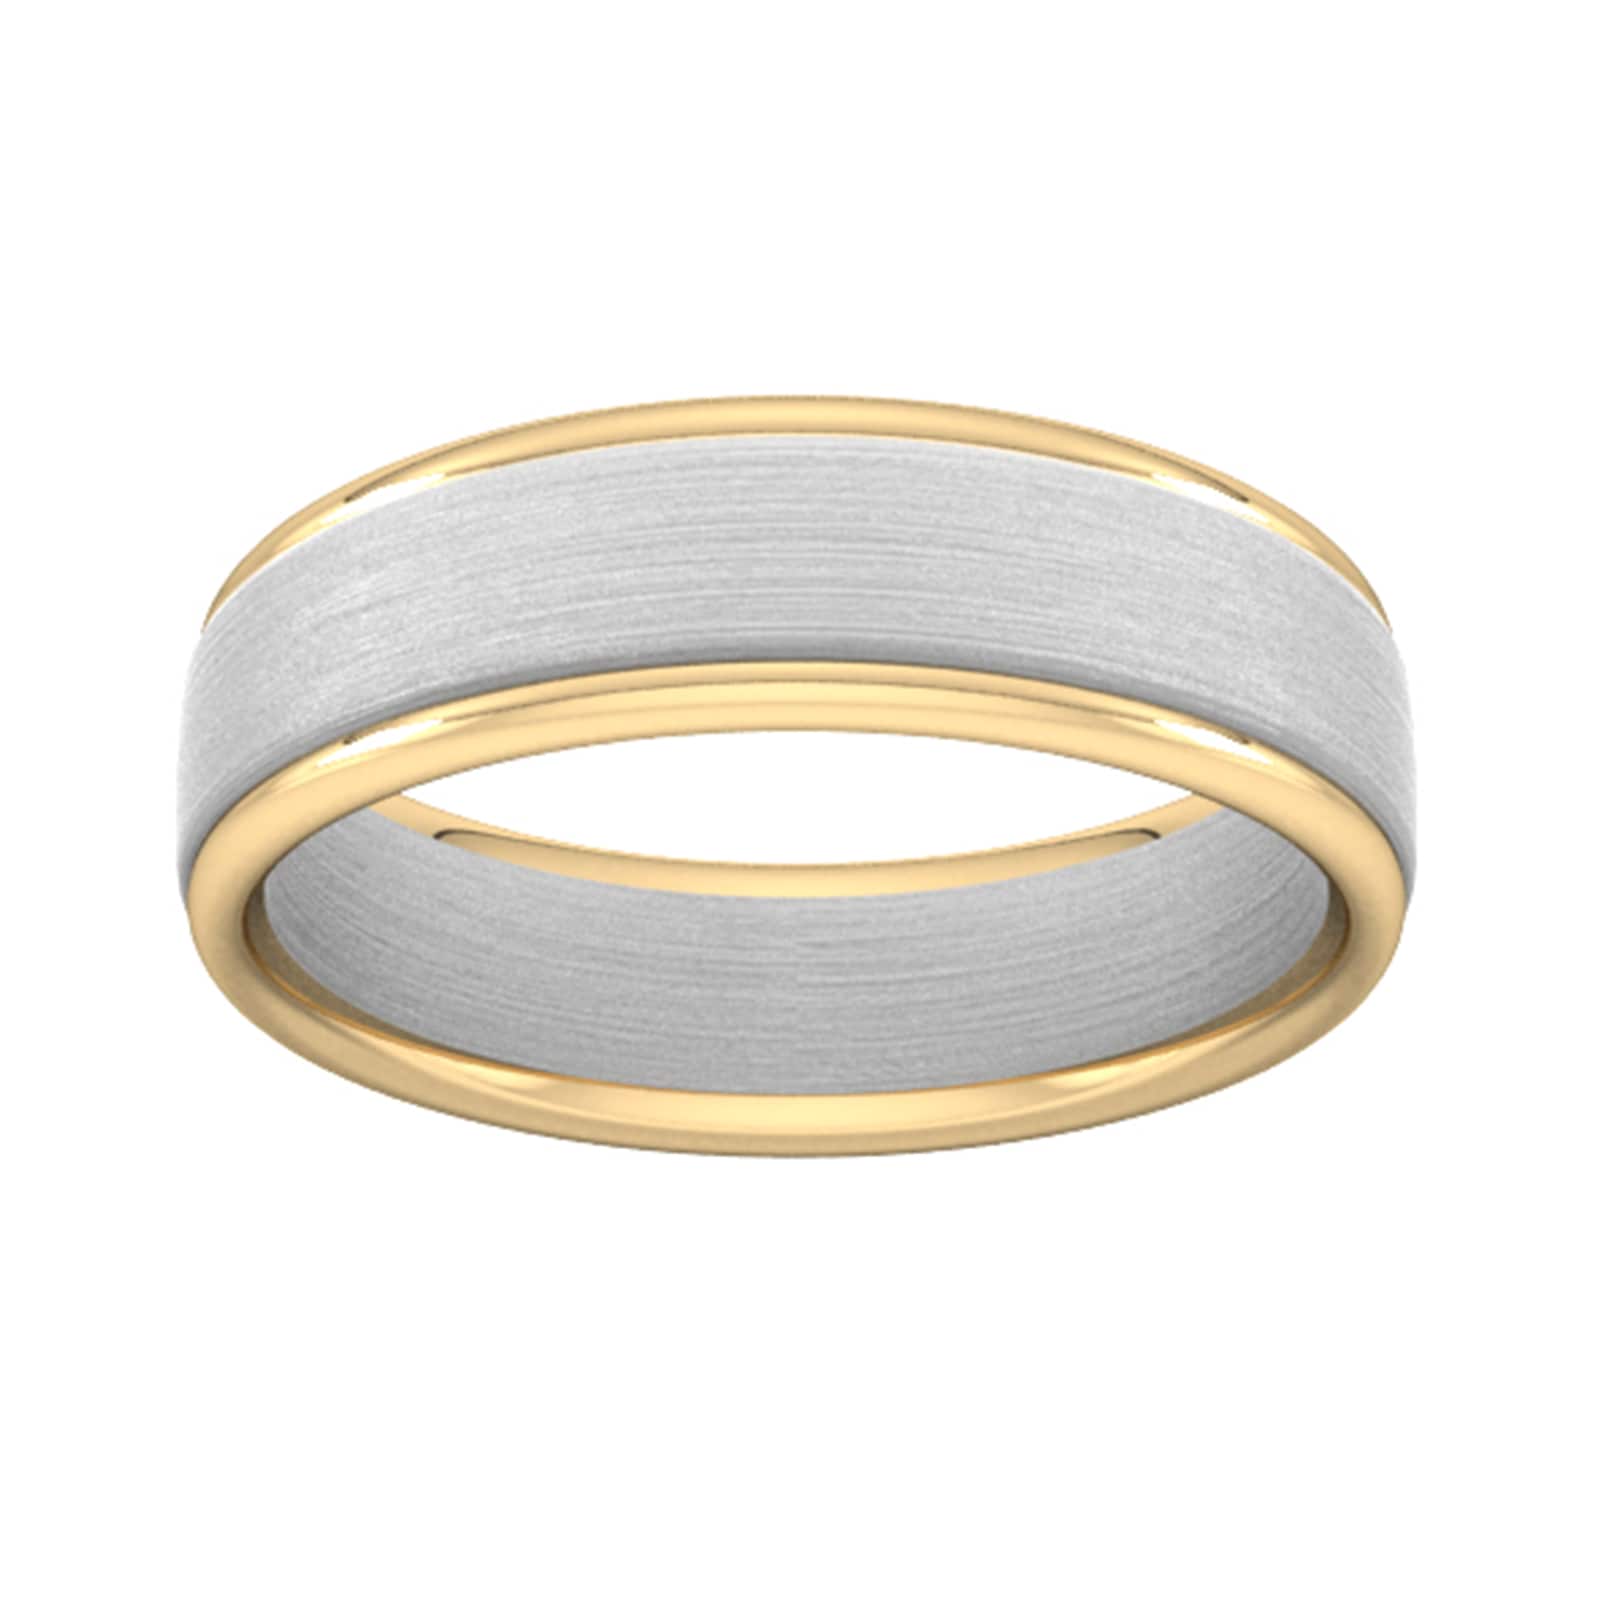 6mm Wedding Ring In 9 Carat White & Yellow Gold - Ring Size P